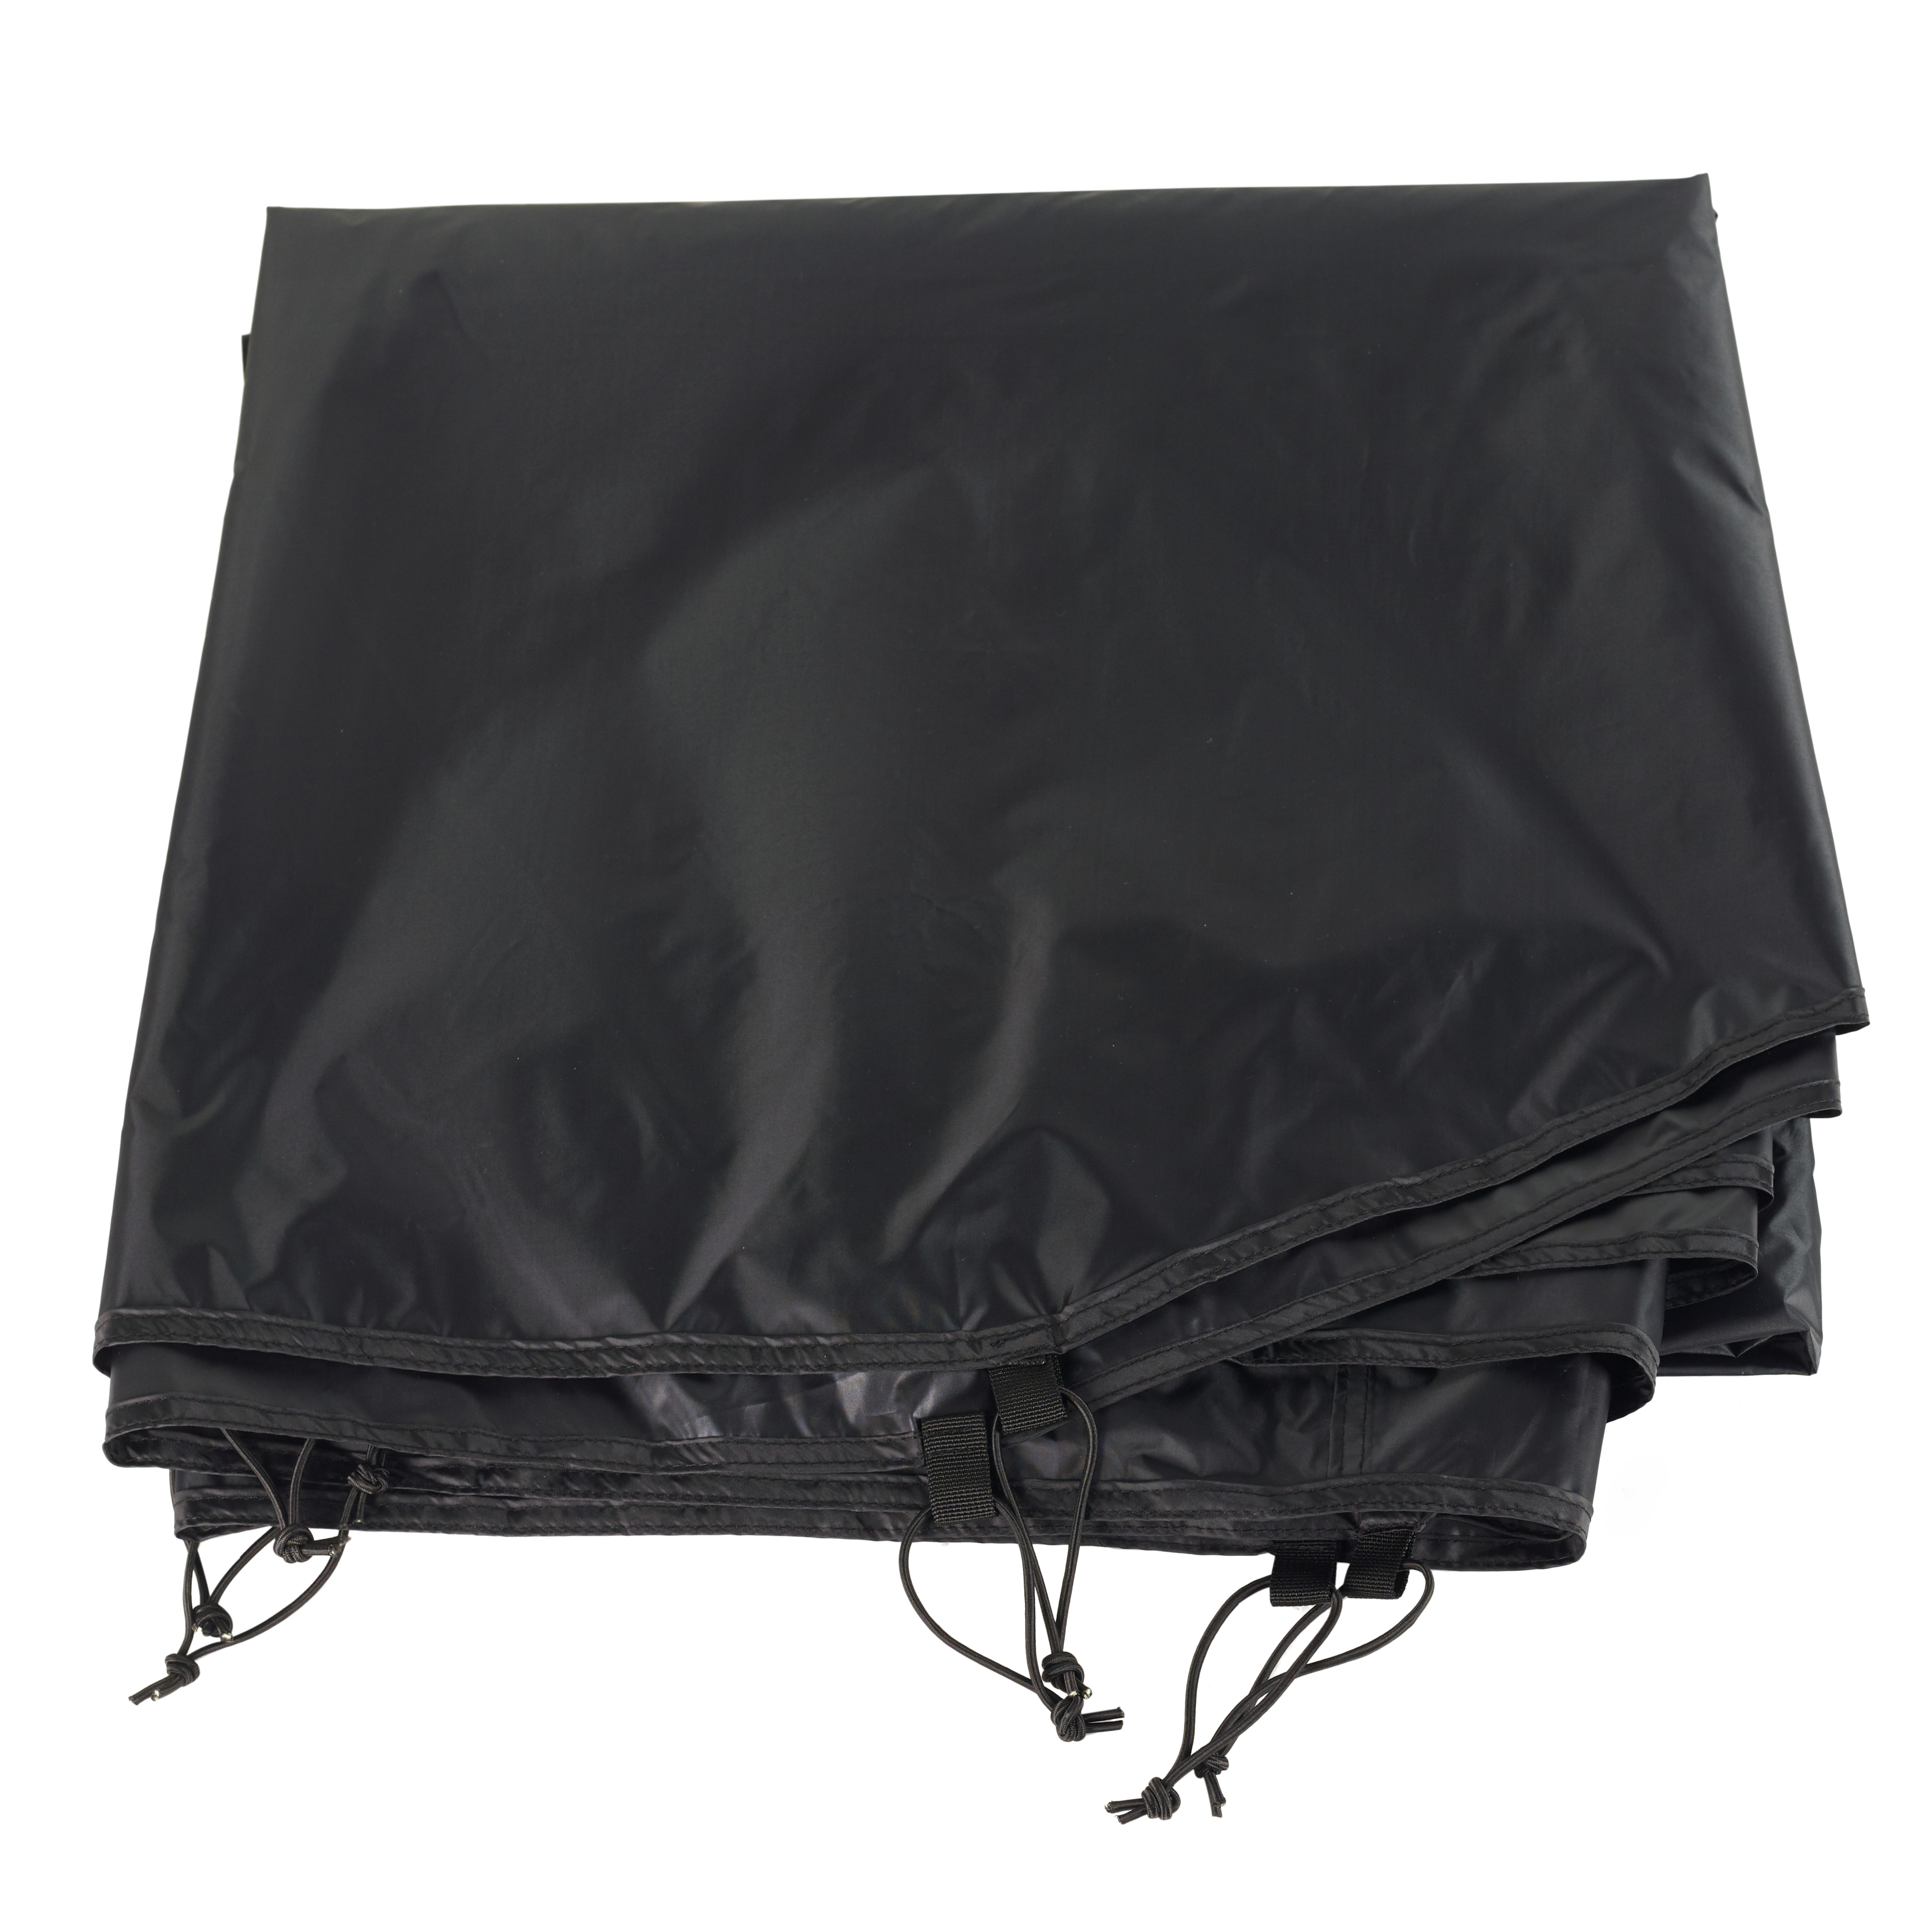 Urberg Footprint 2-Person Dome Tent G3 Black OneSize, Black